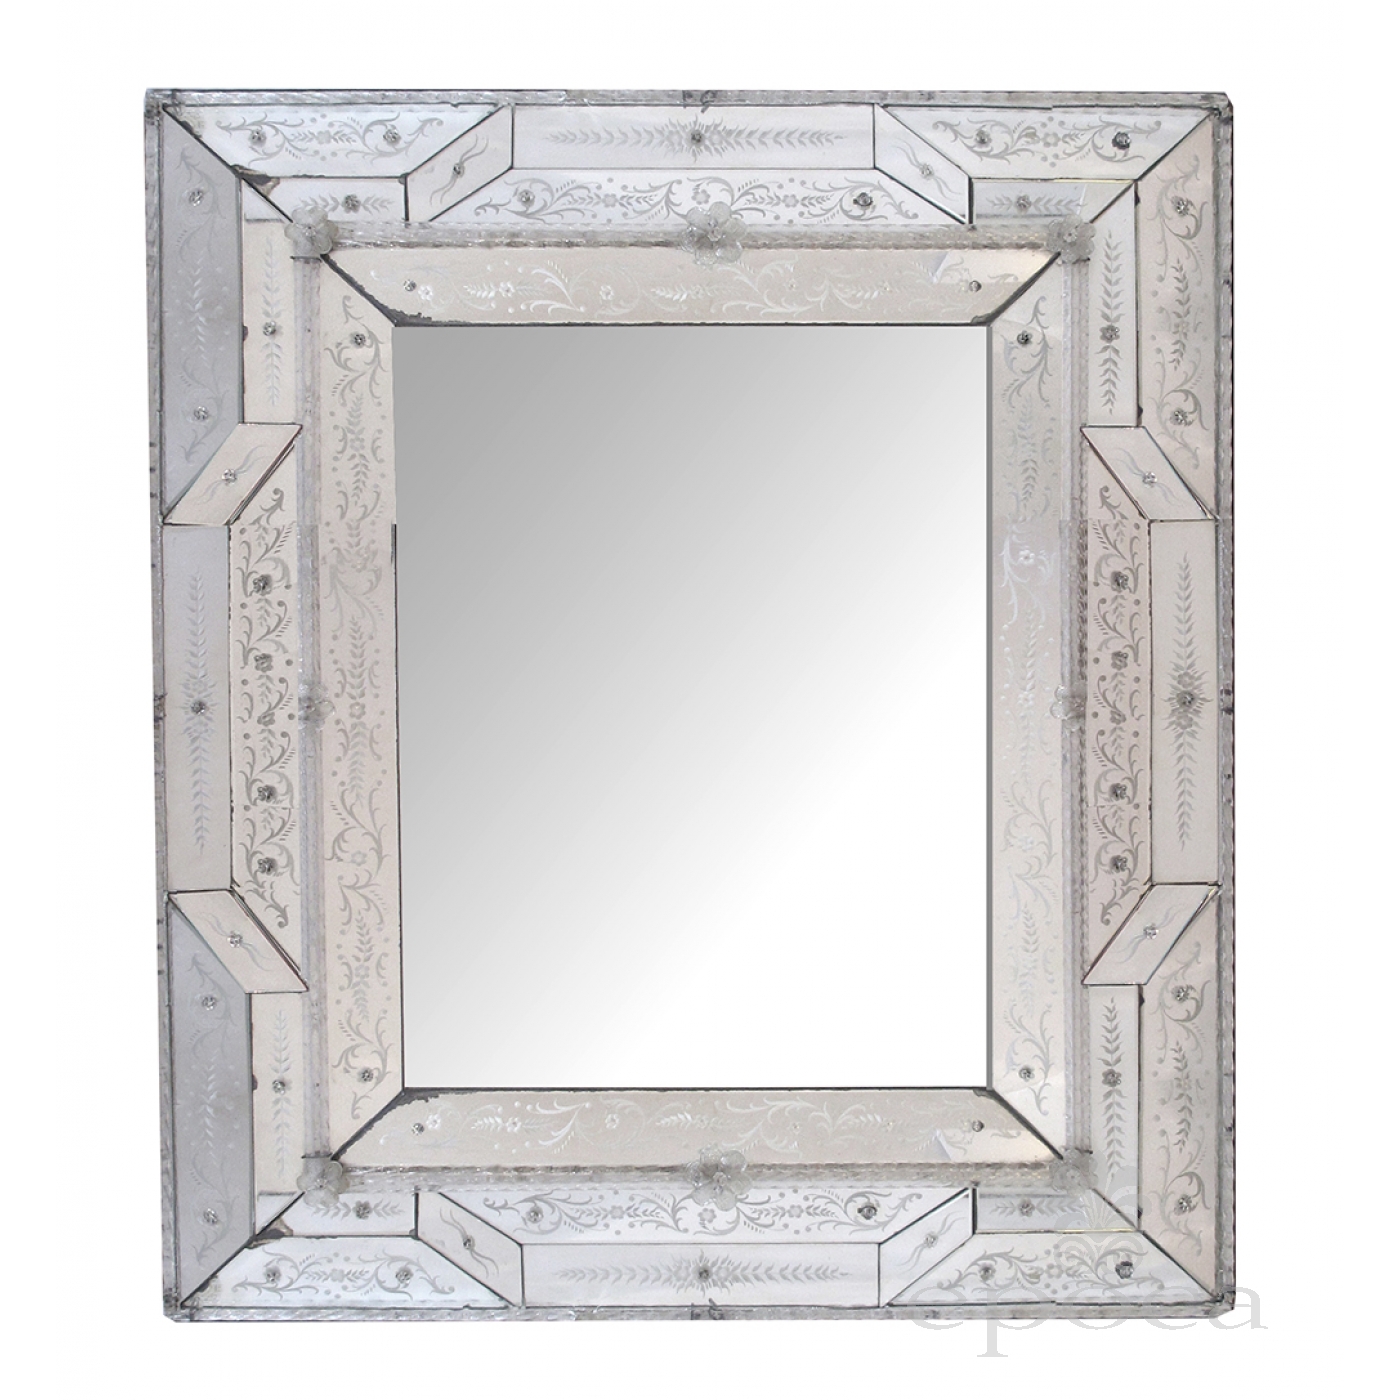 Rectangle Venetian Mirrors: Reflection Of Classy Elegance